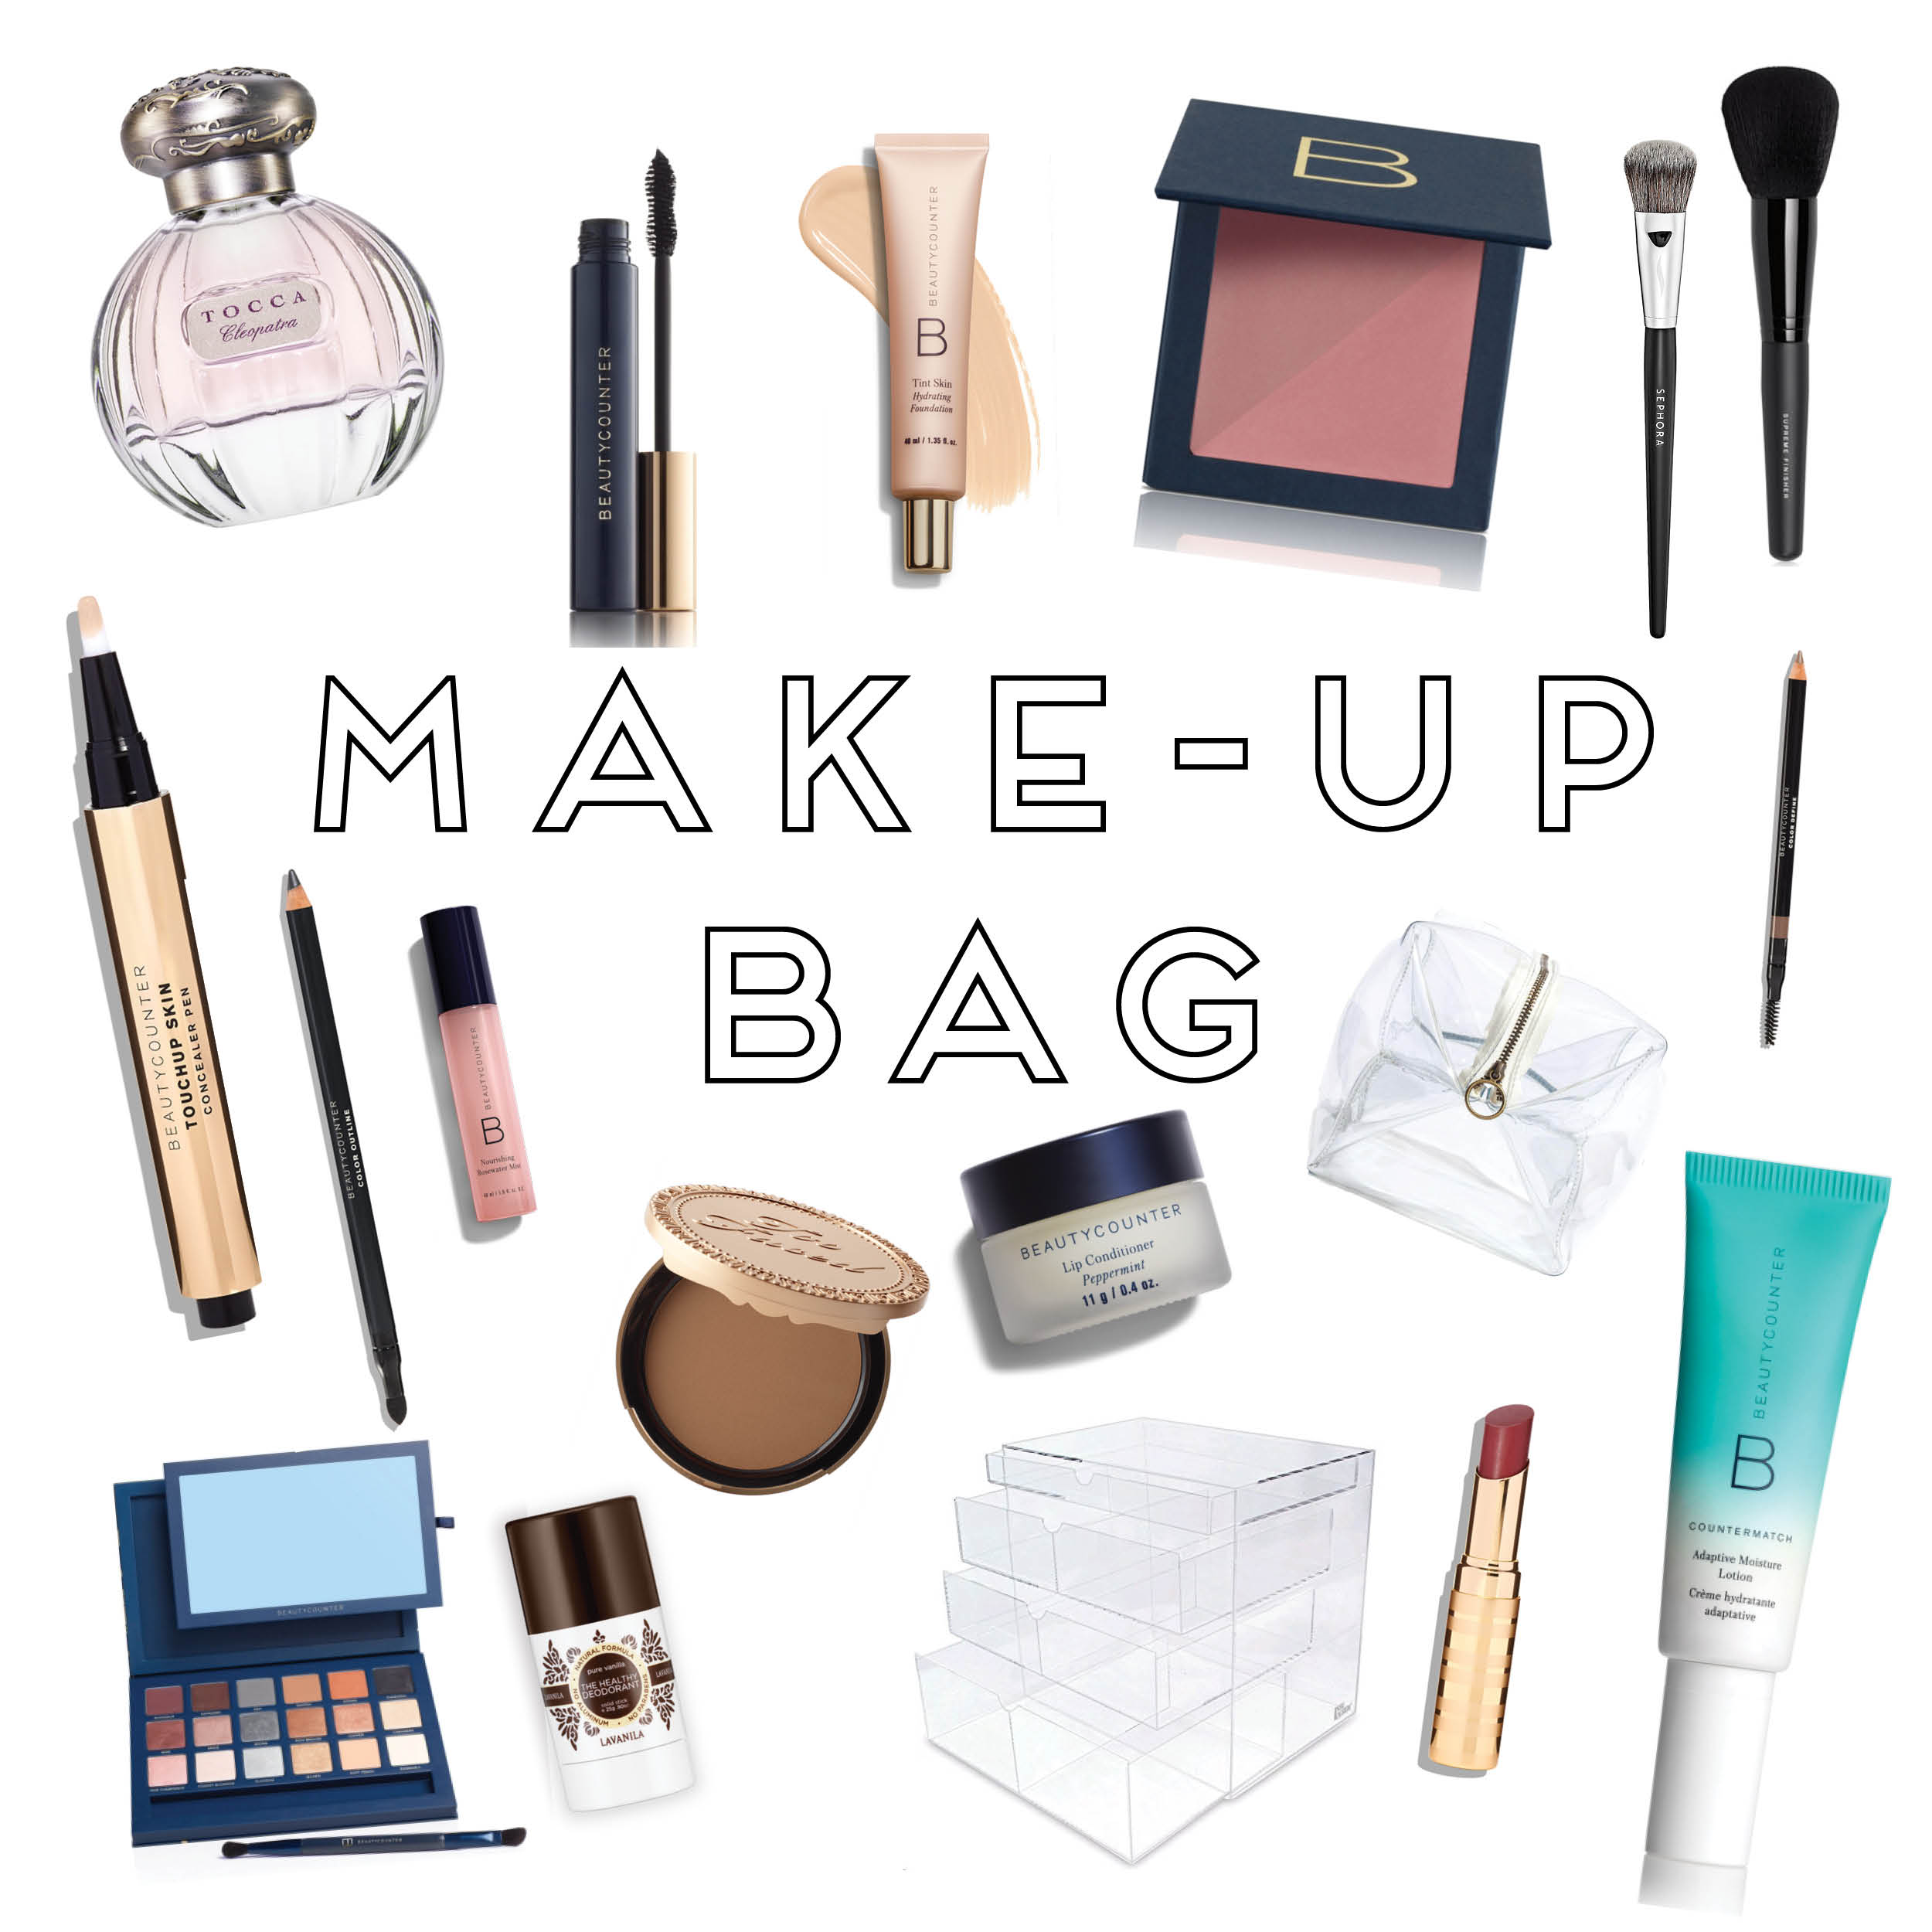 Make-up Bag Flat Lay FINAL.jpg